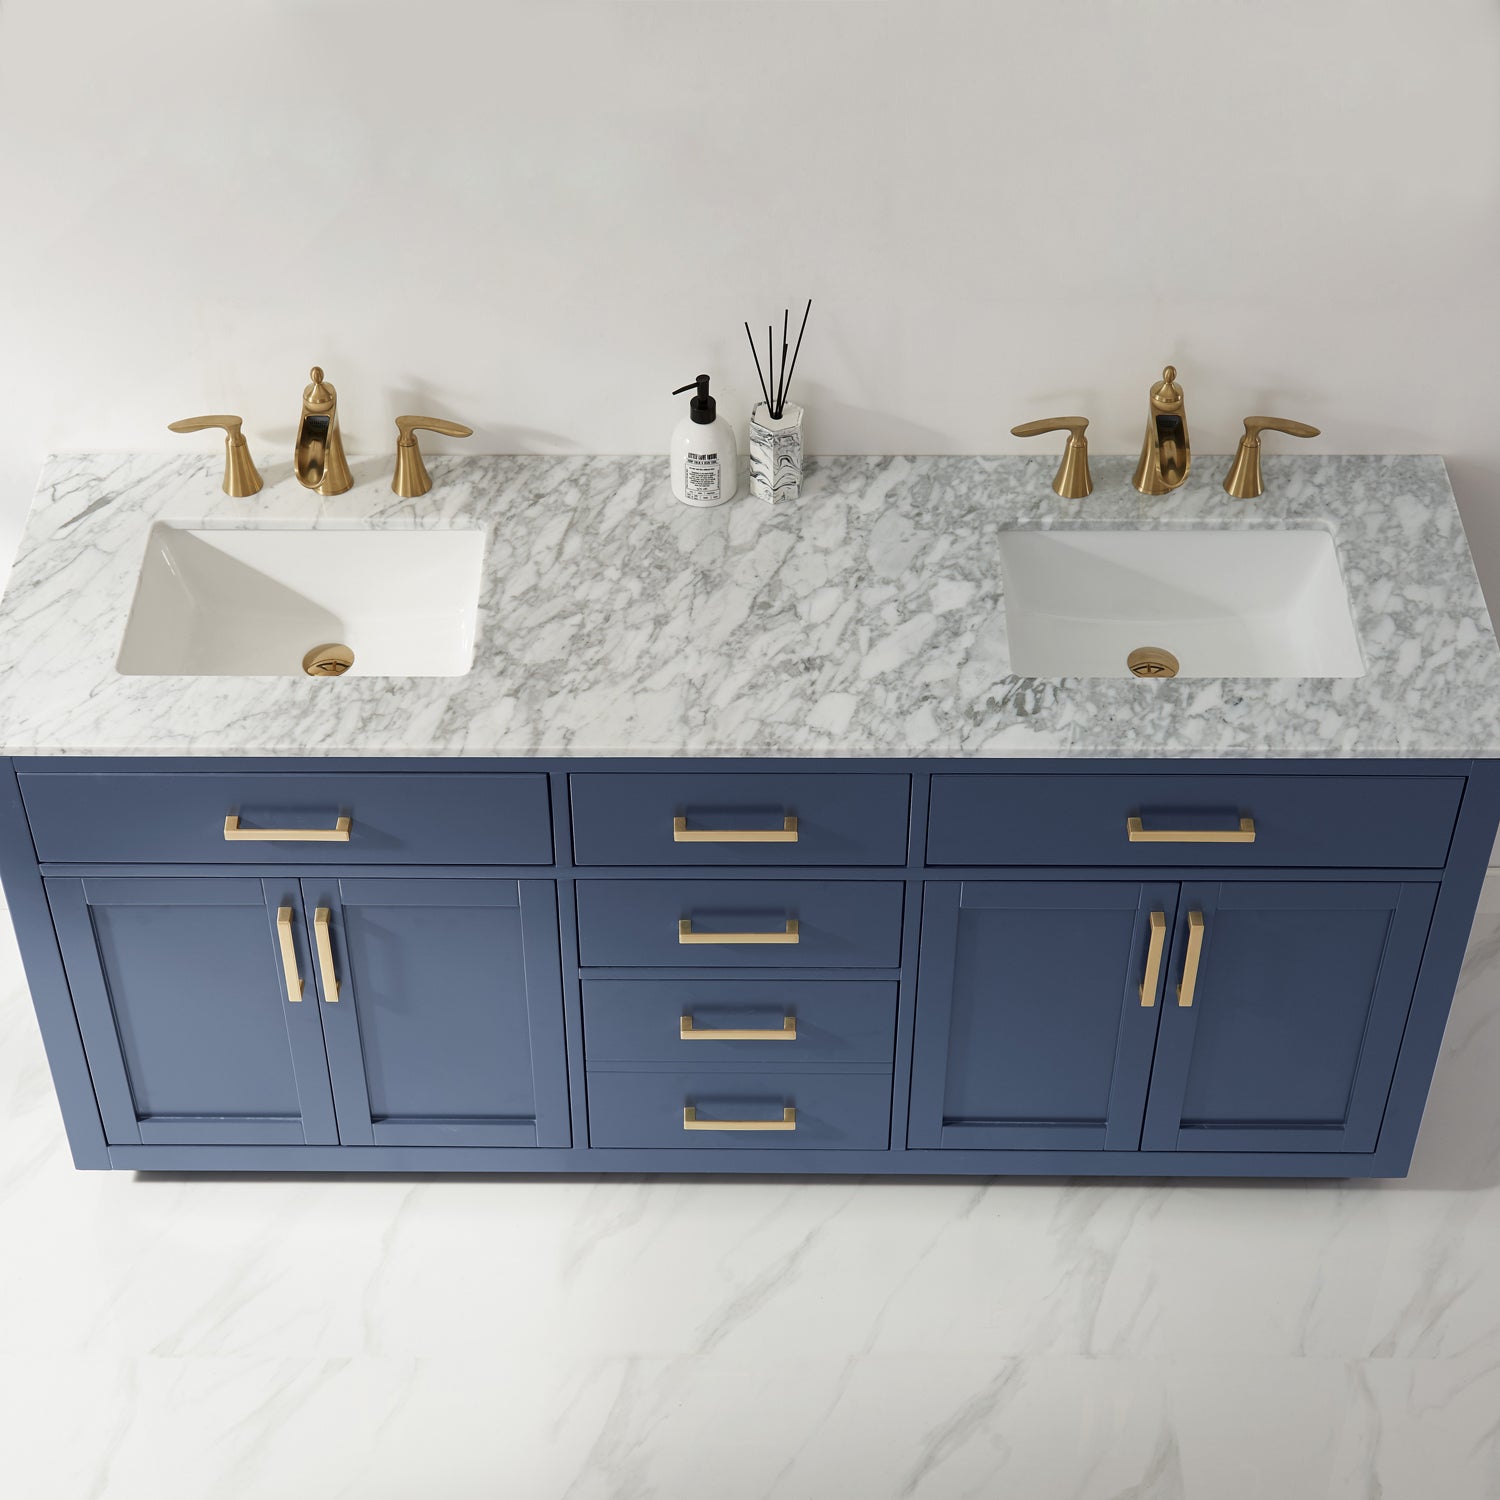 Ivy 72" Double Bathroom Vanity Set with Carrara White Marble Countertop